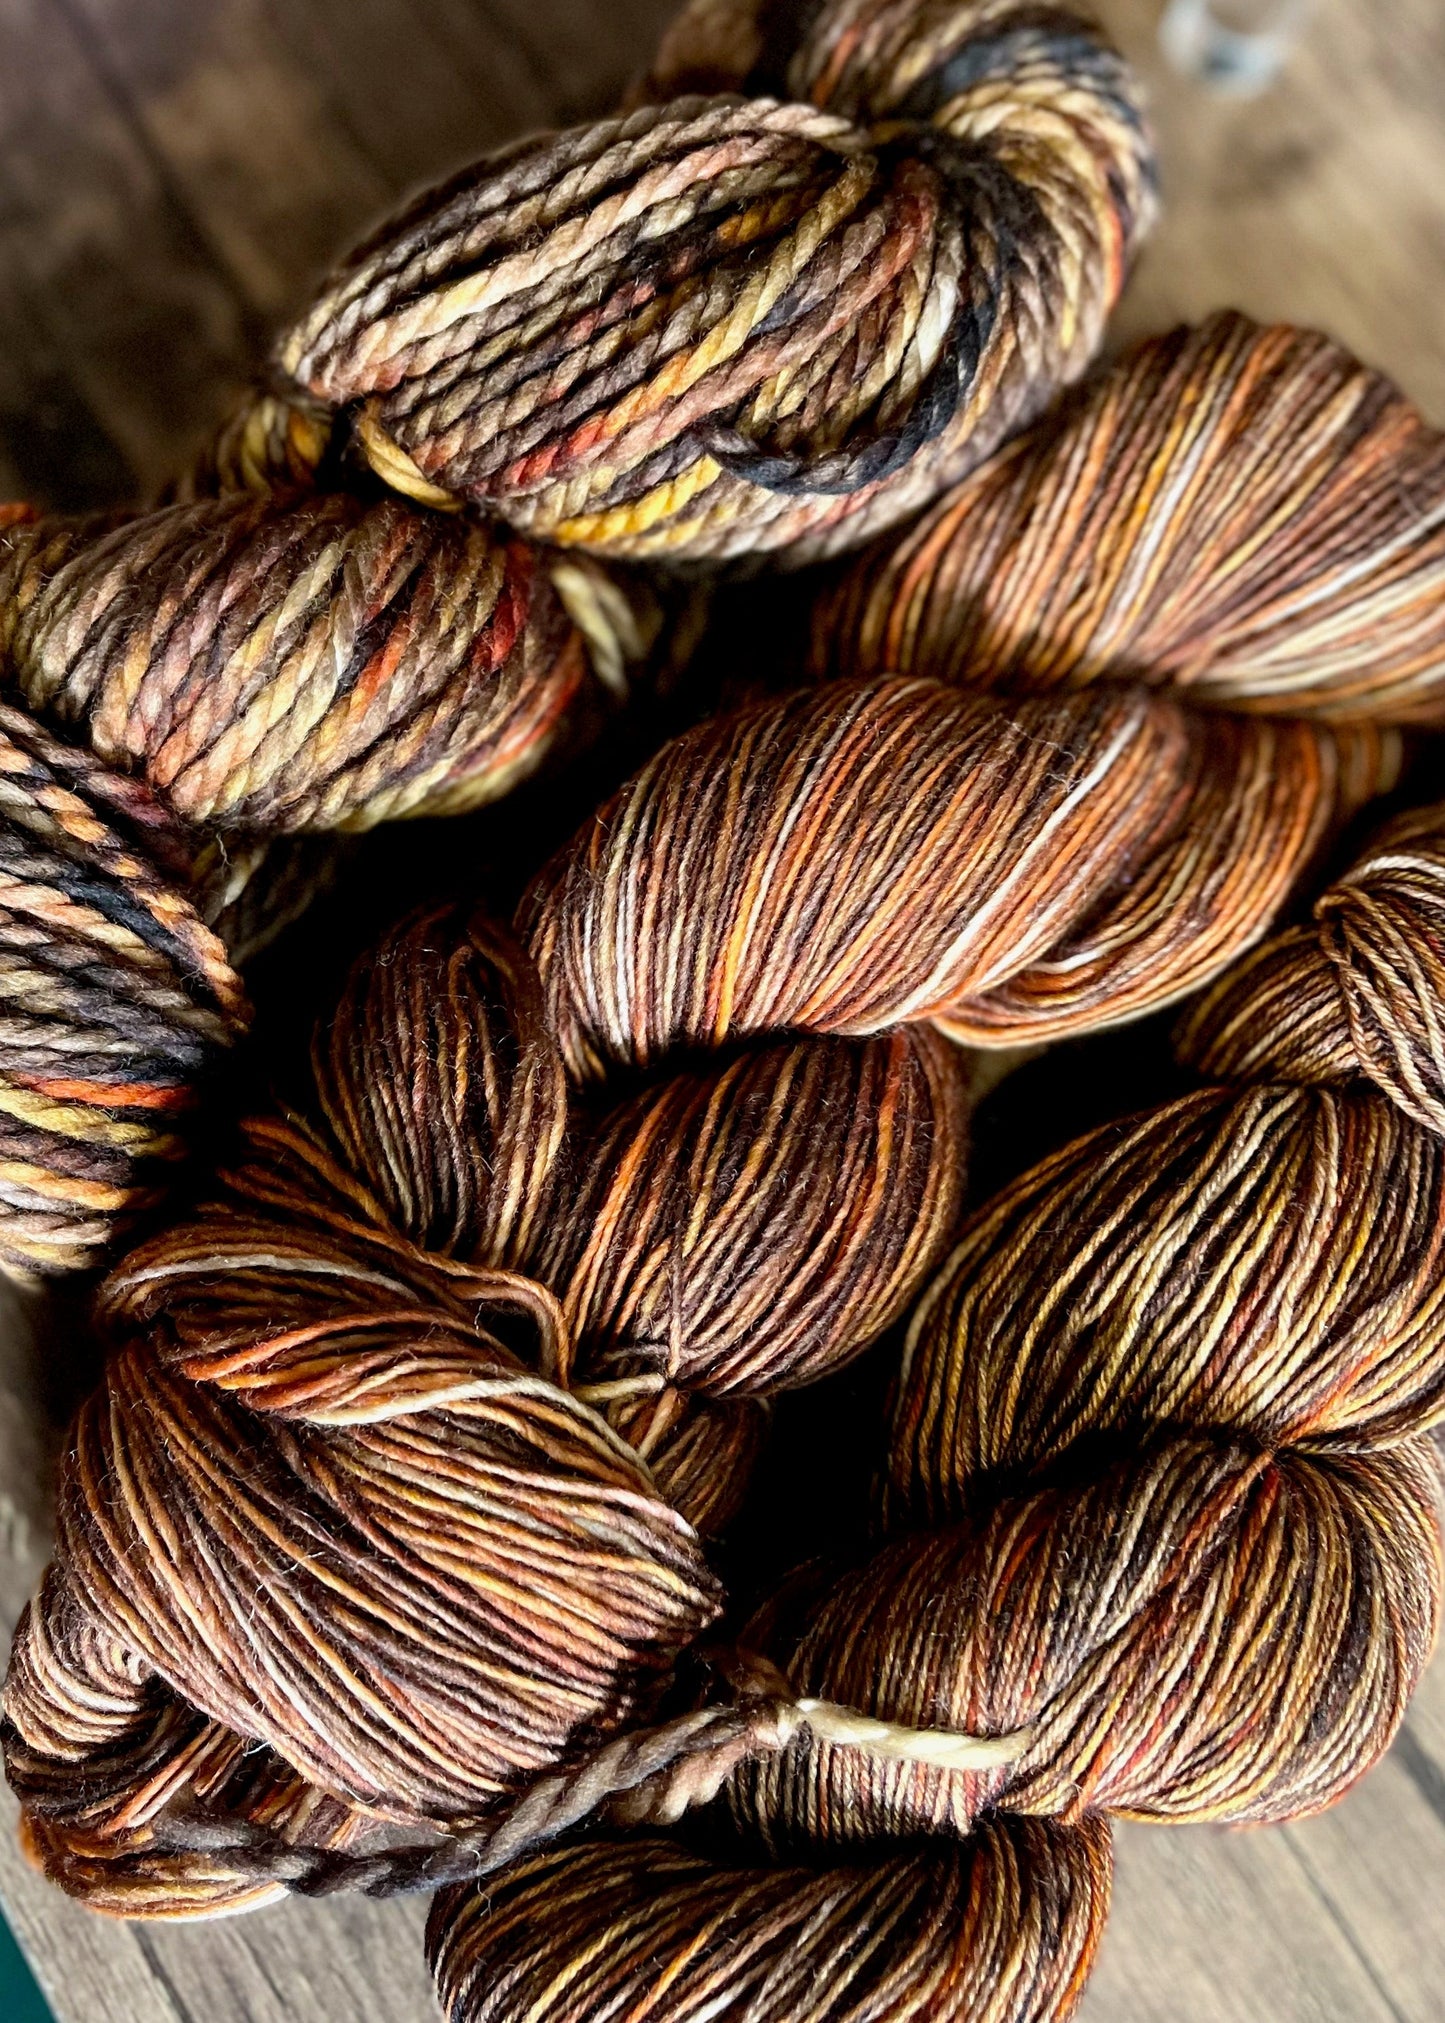 Hand-dyed Sock Superwash MerinoNylon Blend Yarn in Fall Leaves, 100g Skein